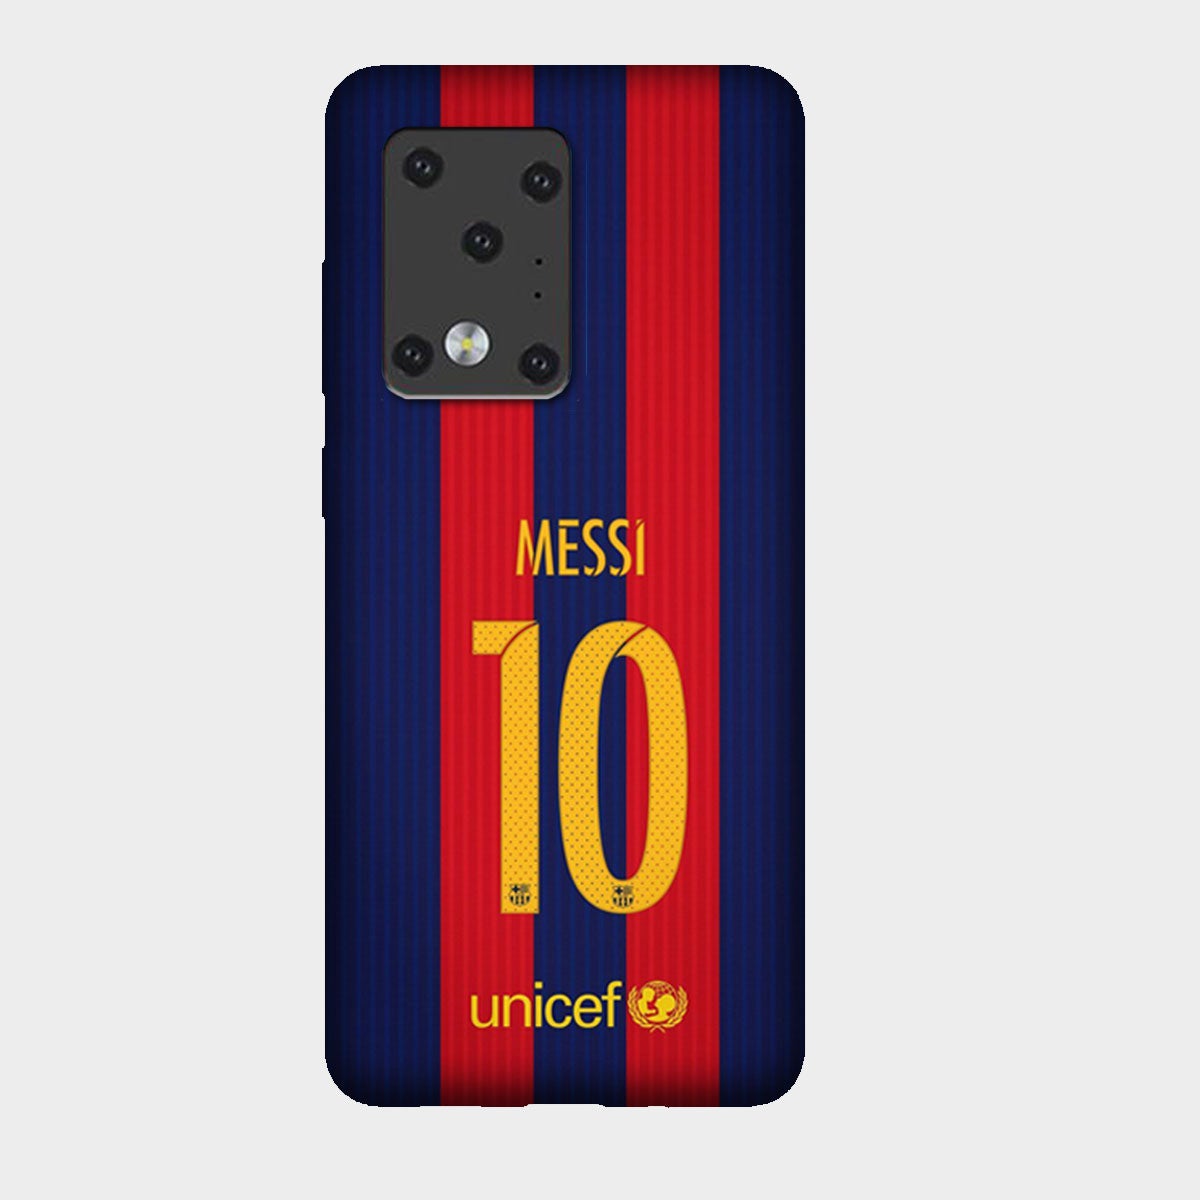 Lionel Messi Shirt - FC Barcelona - Mobile Phone Cover - Hard Case - Samsung - Samsung